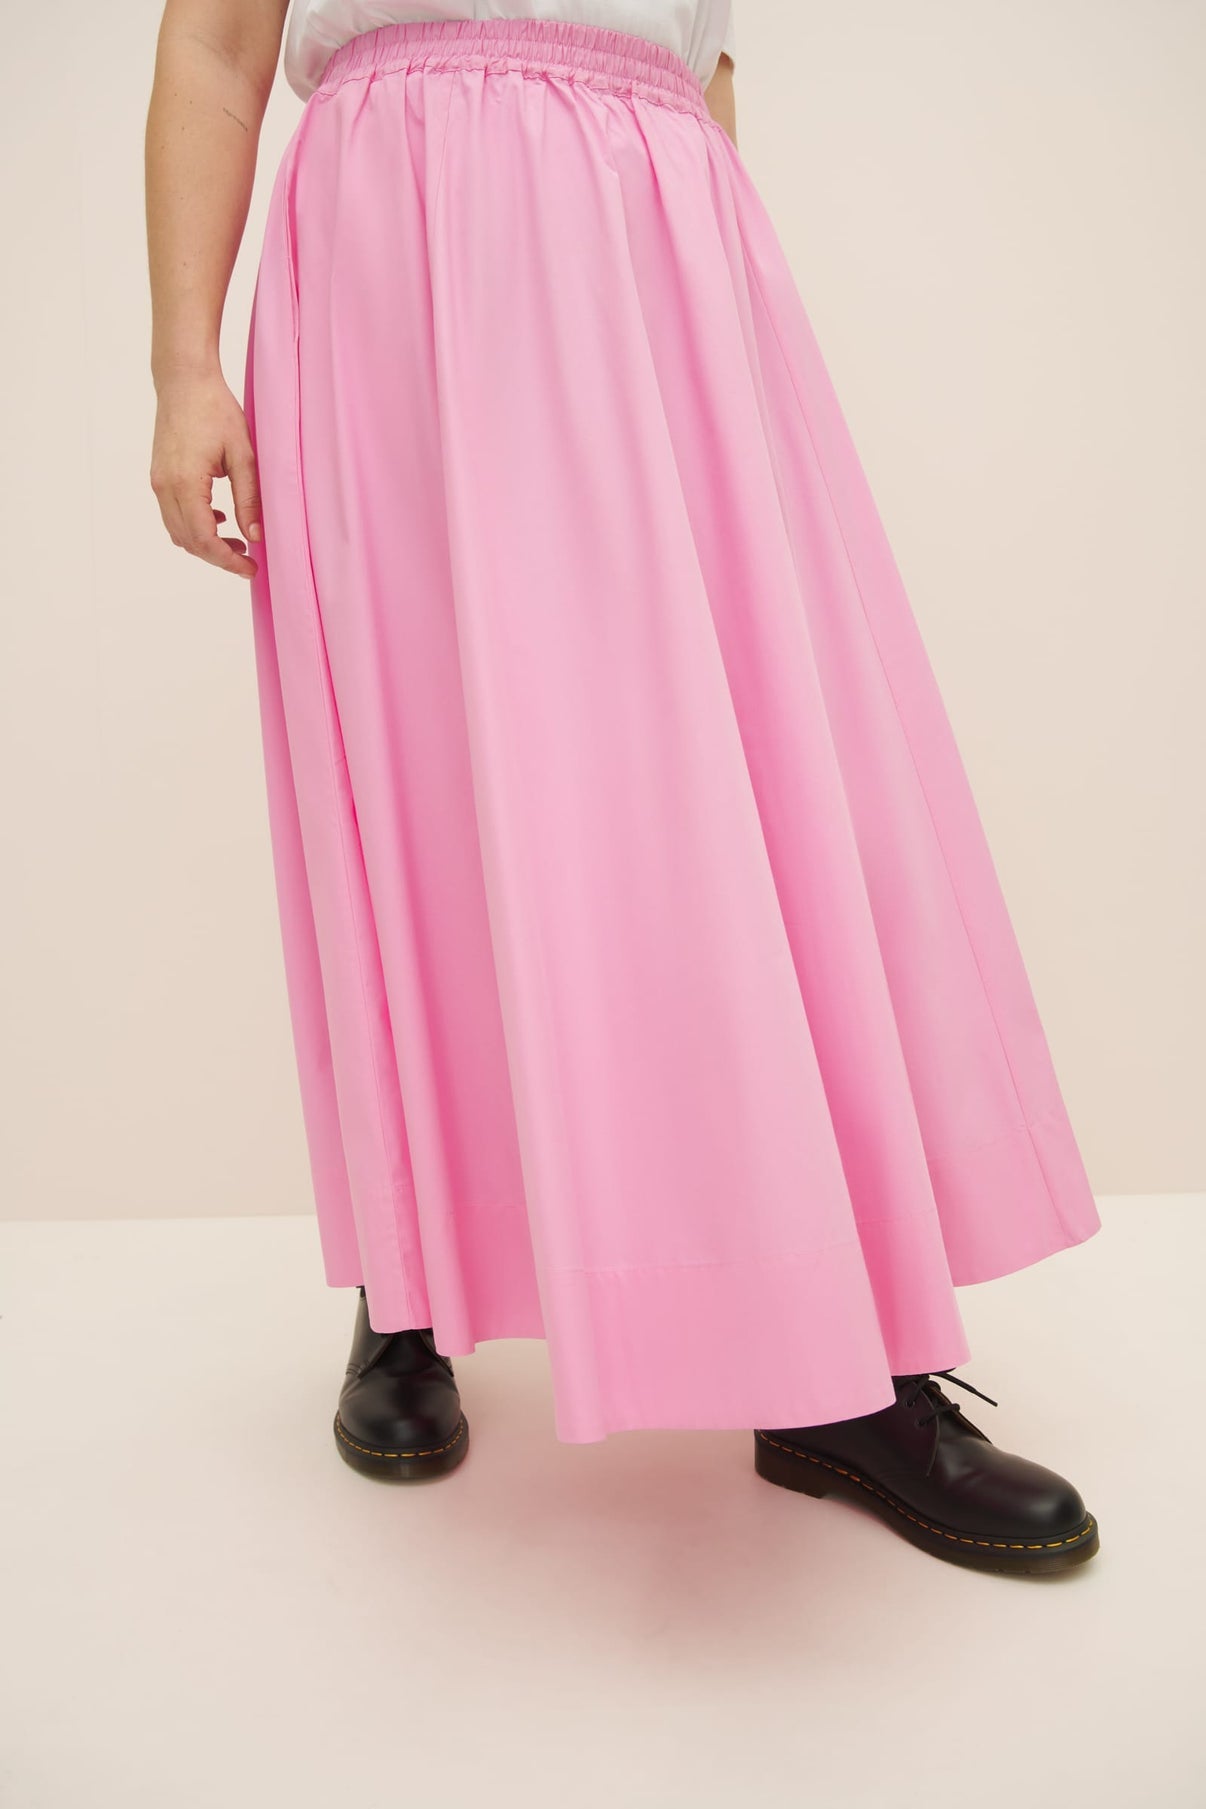 Moya Skirt - Candy Pink